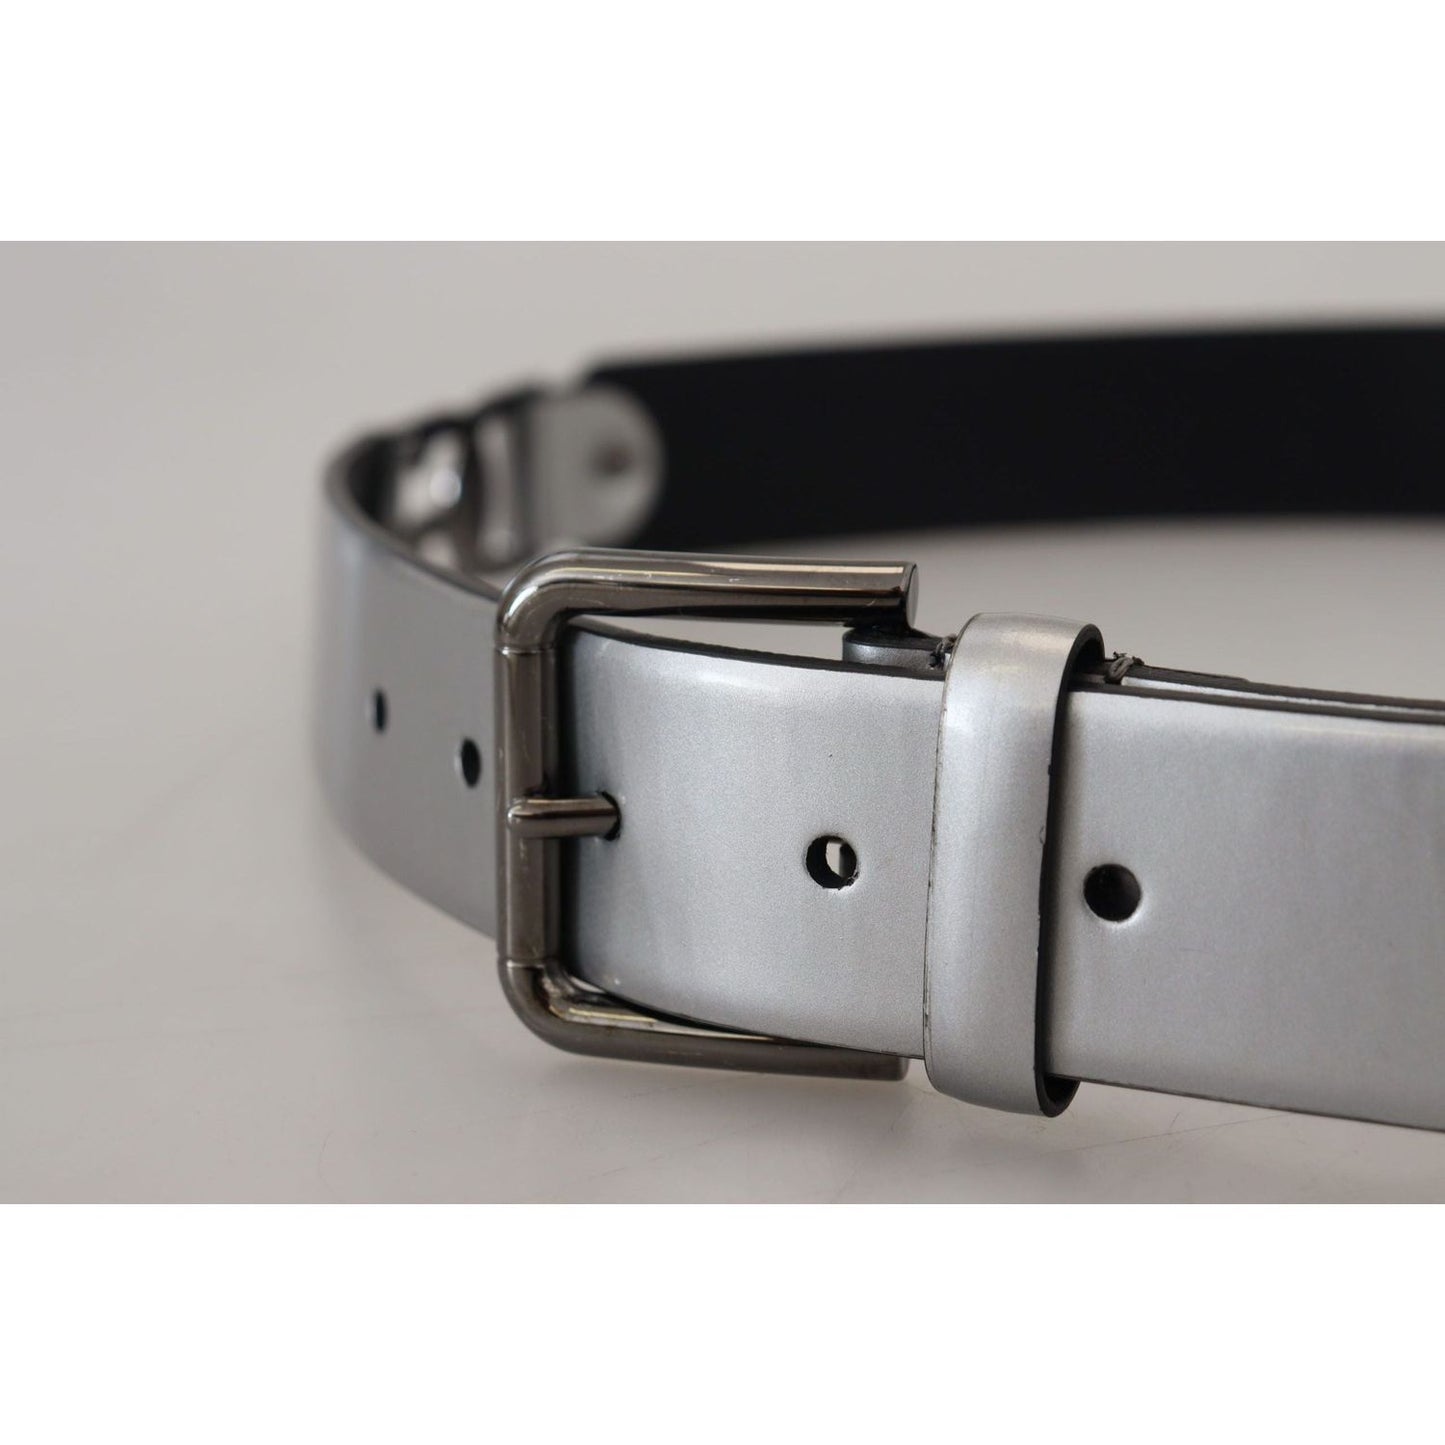 Dolce & Gabbana Chic Silver Leather Belt with Metal Buckle metallic-silver-leather-dg-logo-metal-buckle-belt IMG_2256-scaled-db7c6b24-a5b.jpg